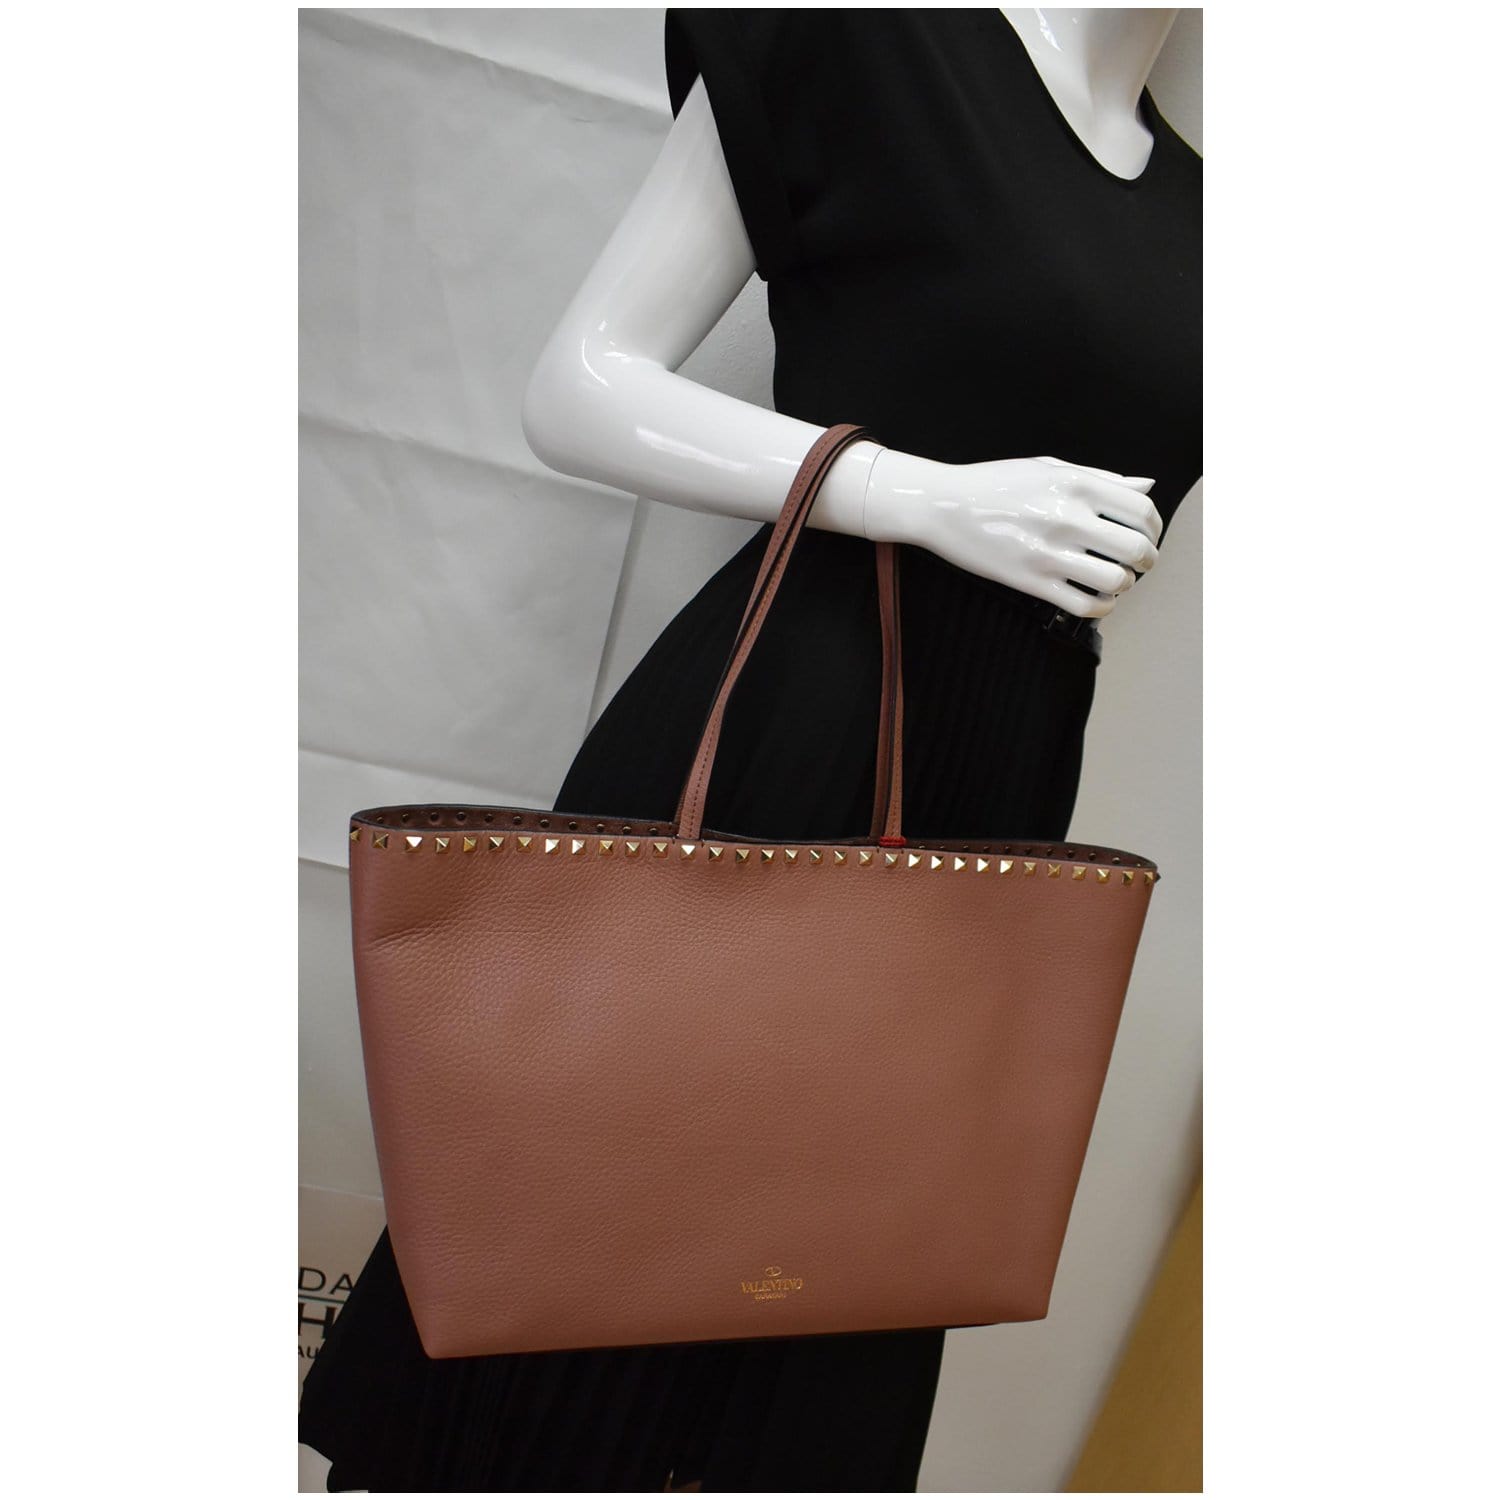 Valentino Garavani Rockstud bag in grained leather - ShopStyle